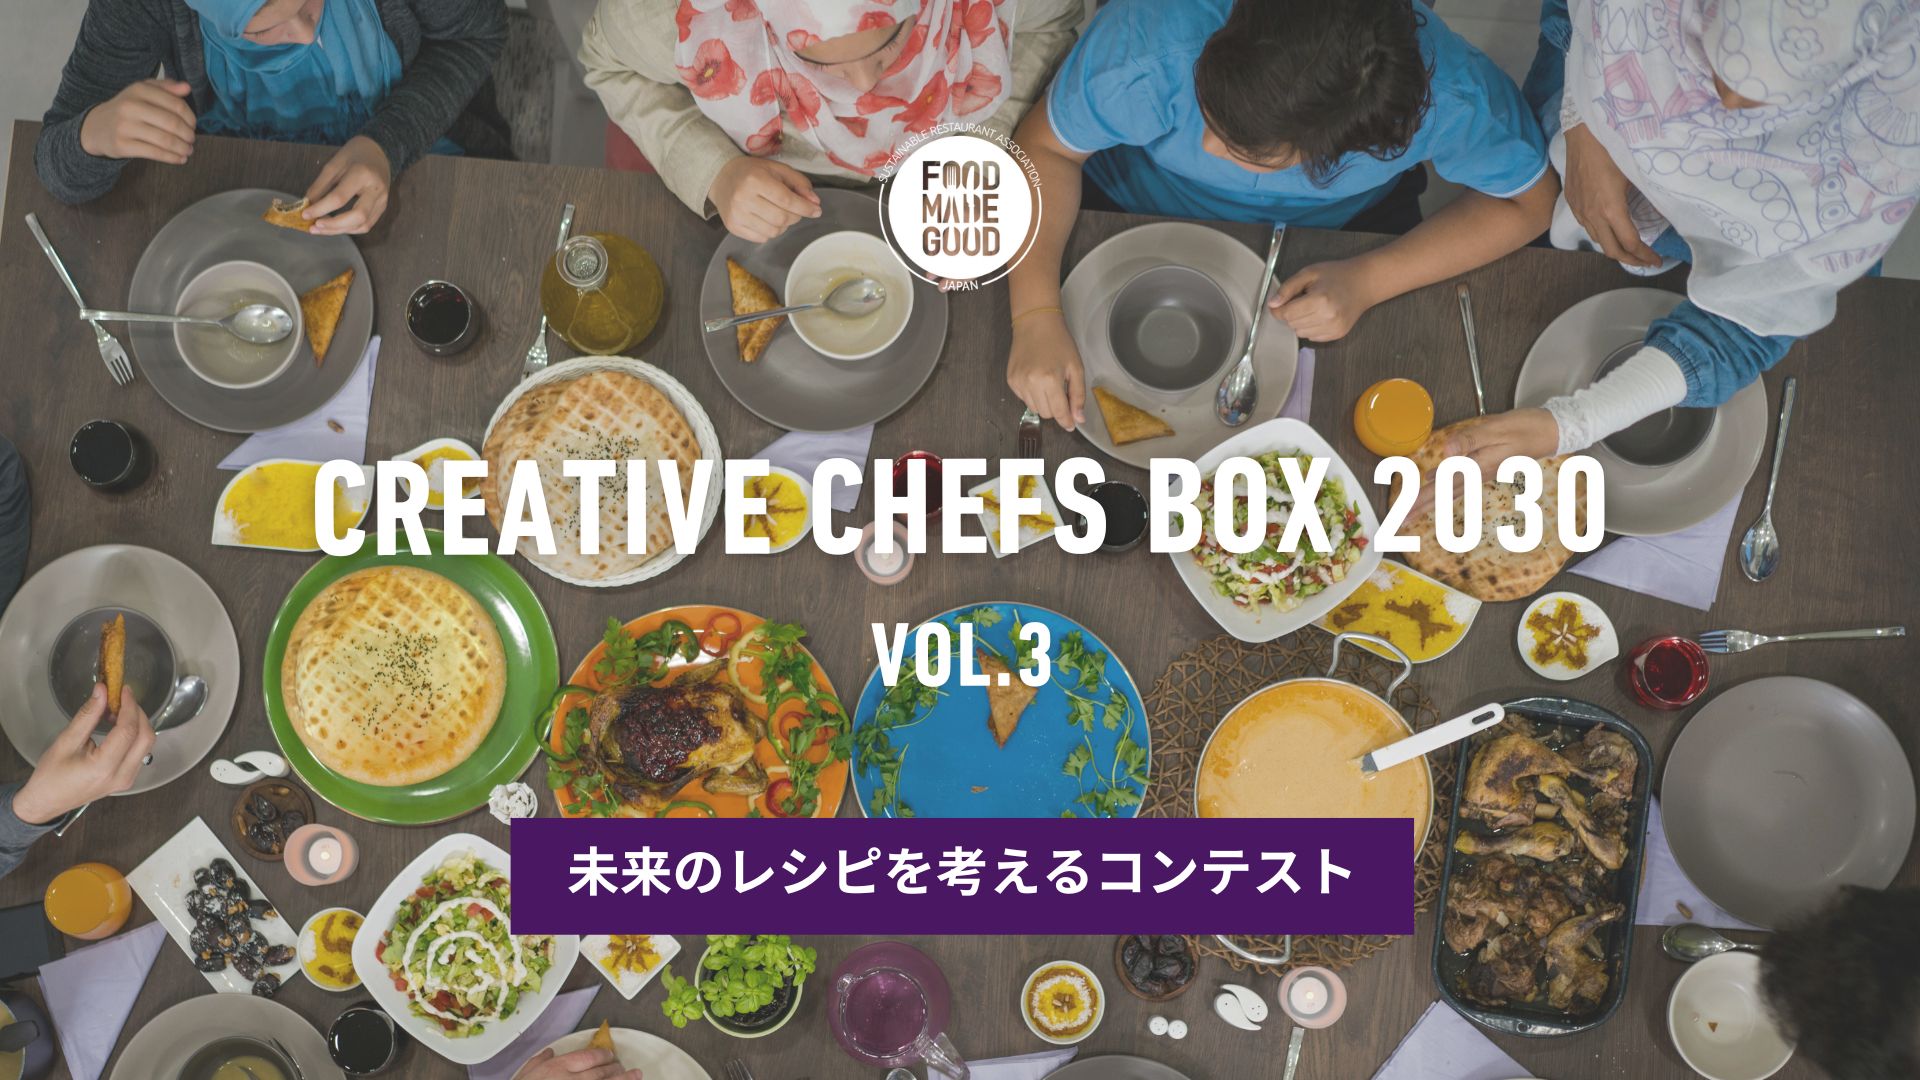 CREATIVE CHEFS BOX 2030 Vol.3「未来のレシピ」募集